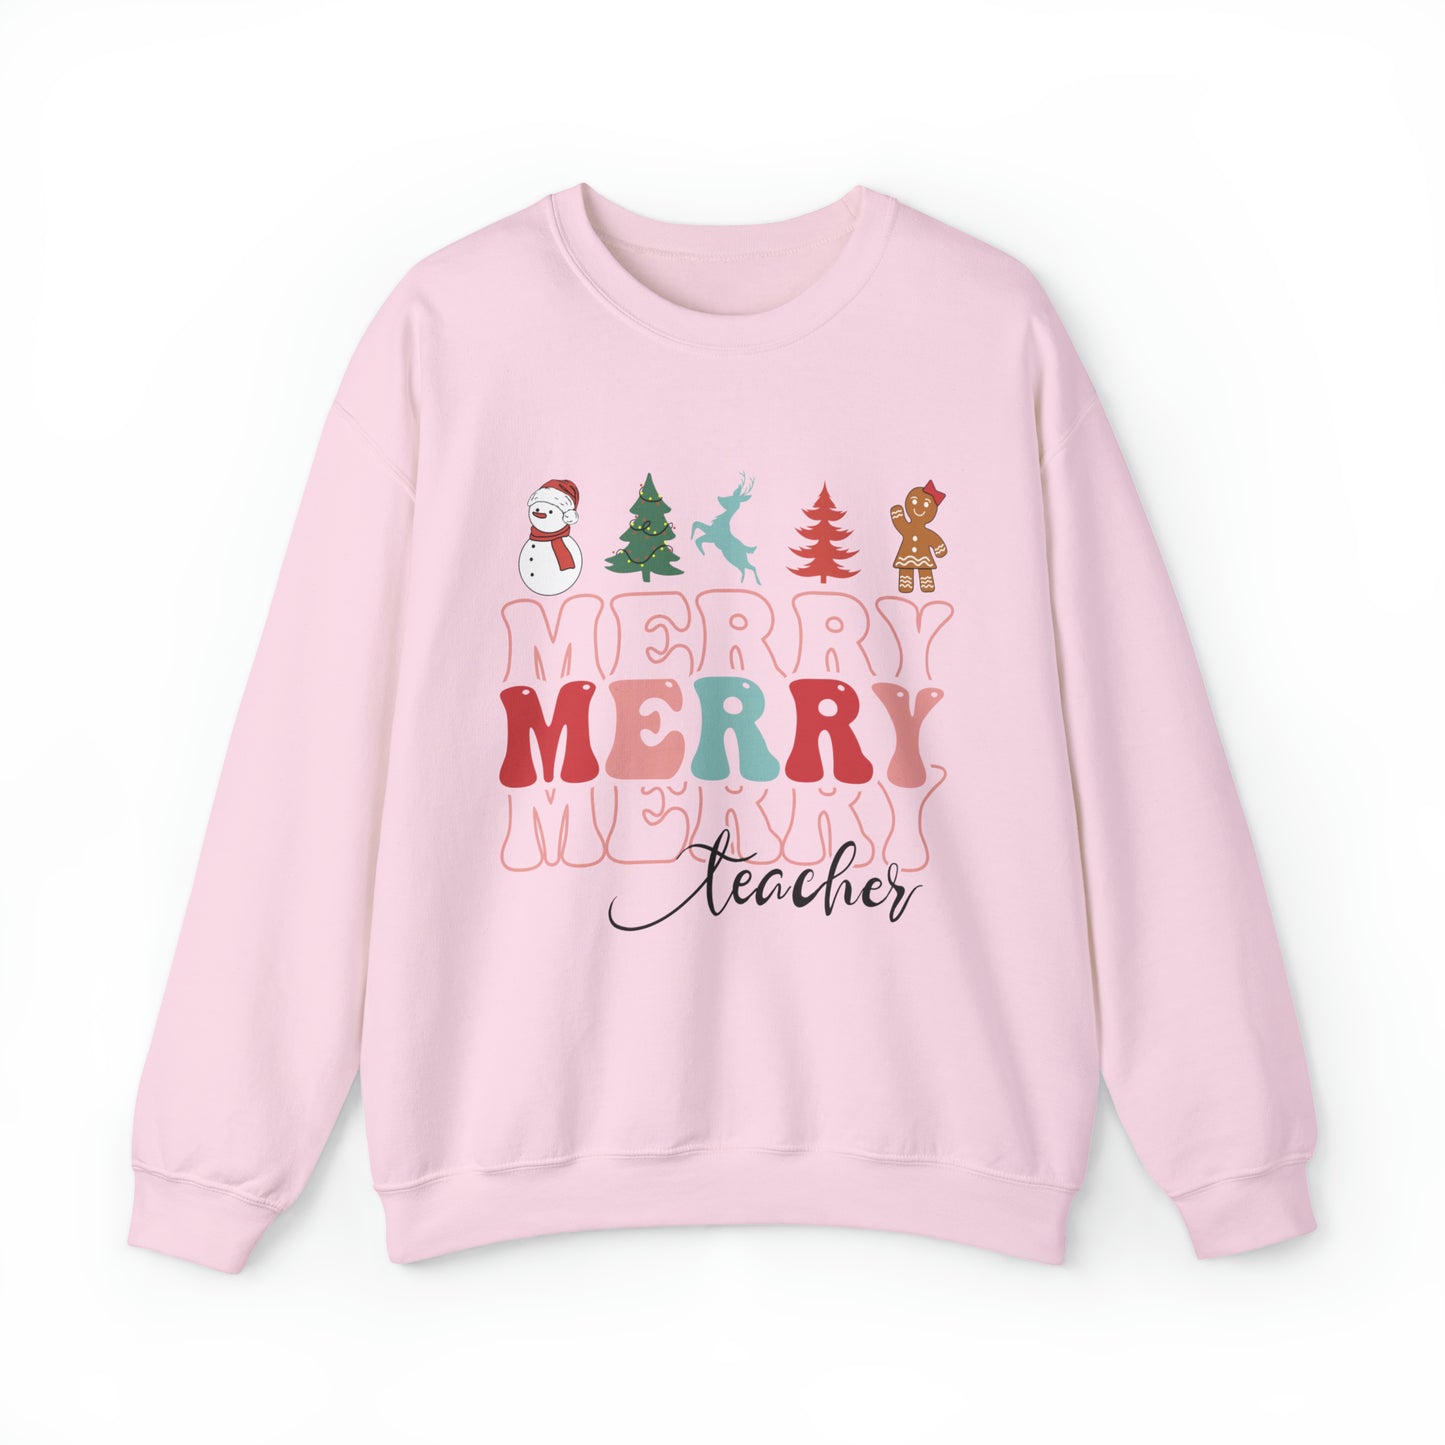 Merry Merry Teacher Women's Christmas Sweatshirt